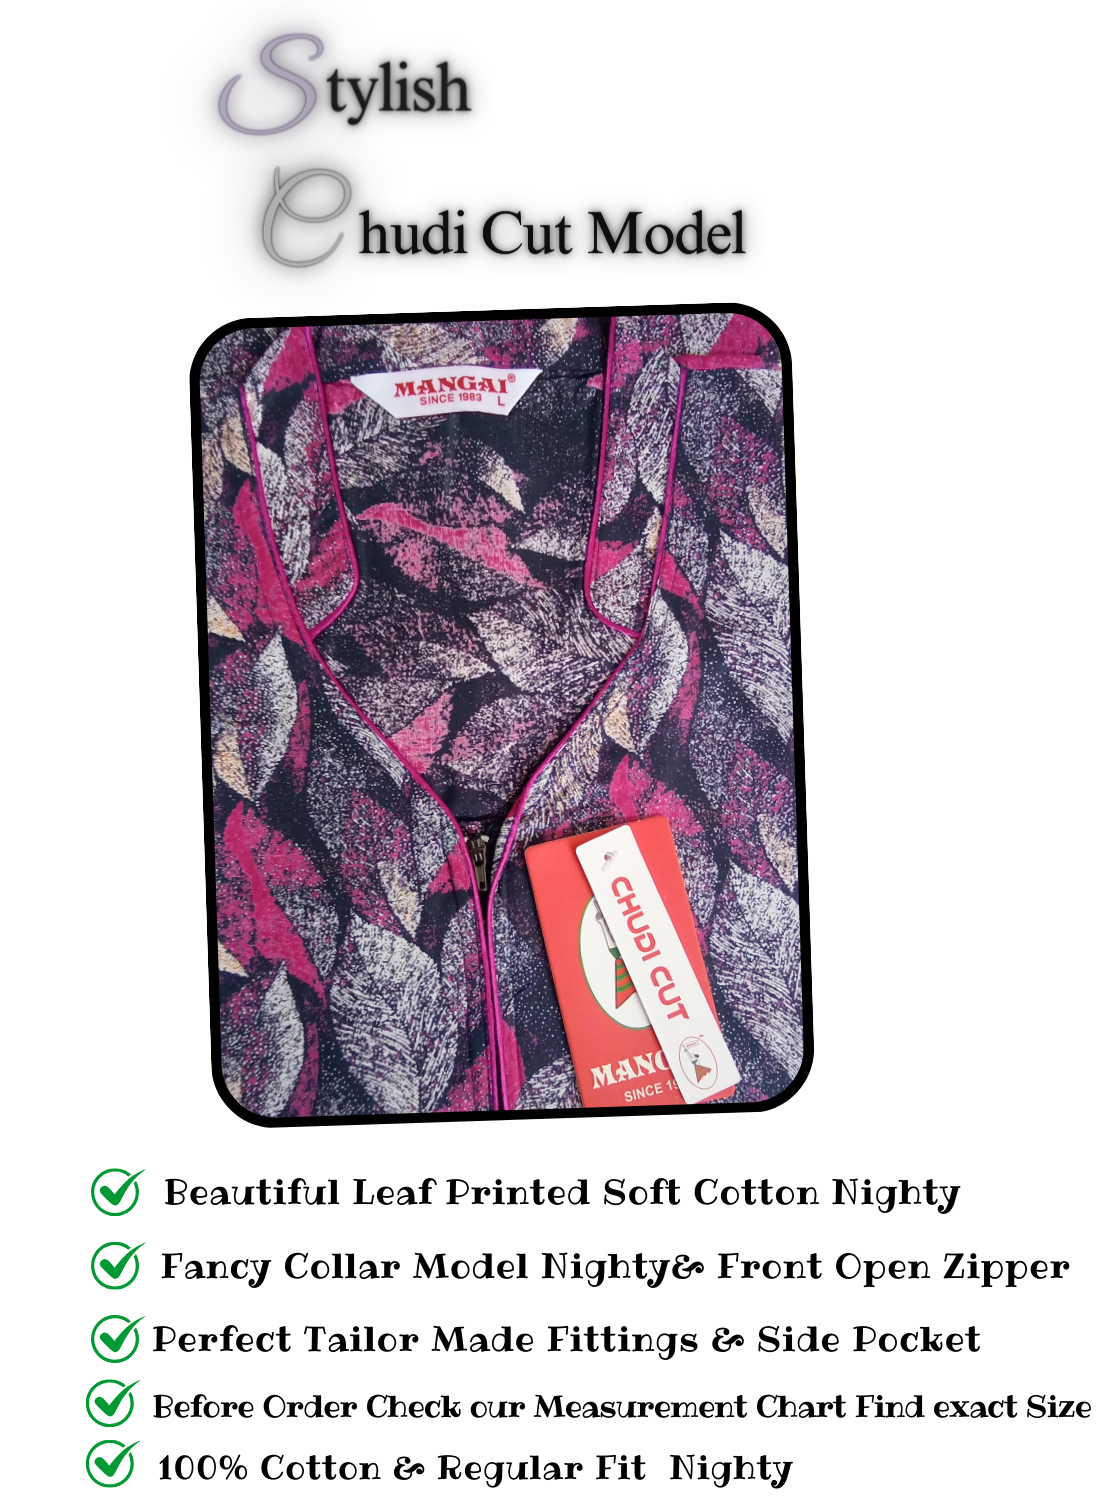 MANGAI Cotton CHUDI CUT Collar Model Nighties - Fancy Neck | With Side Pocket |Shrinkage Free Nighties | Stylish Collection's for Trendy Women's